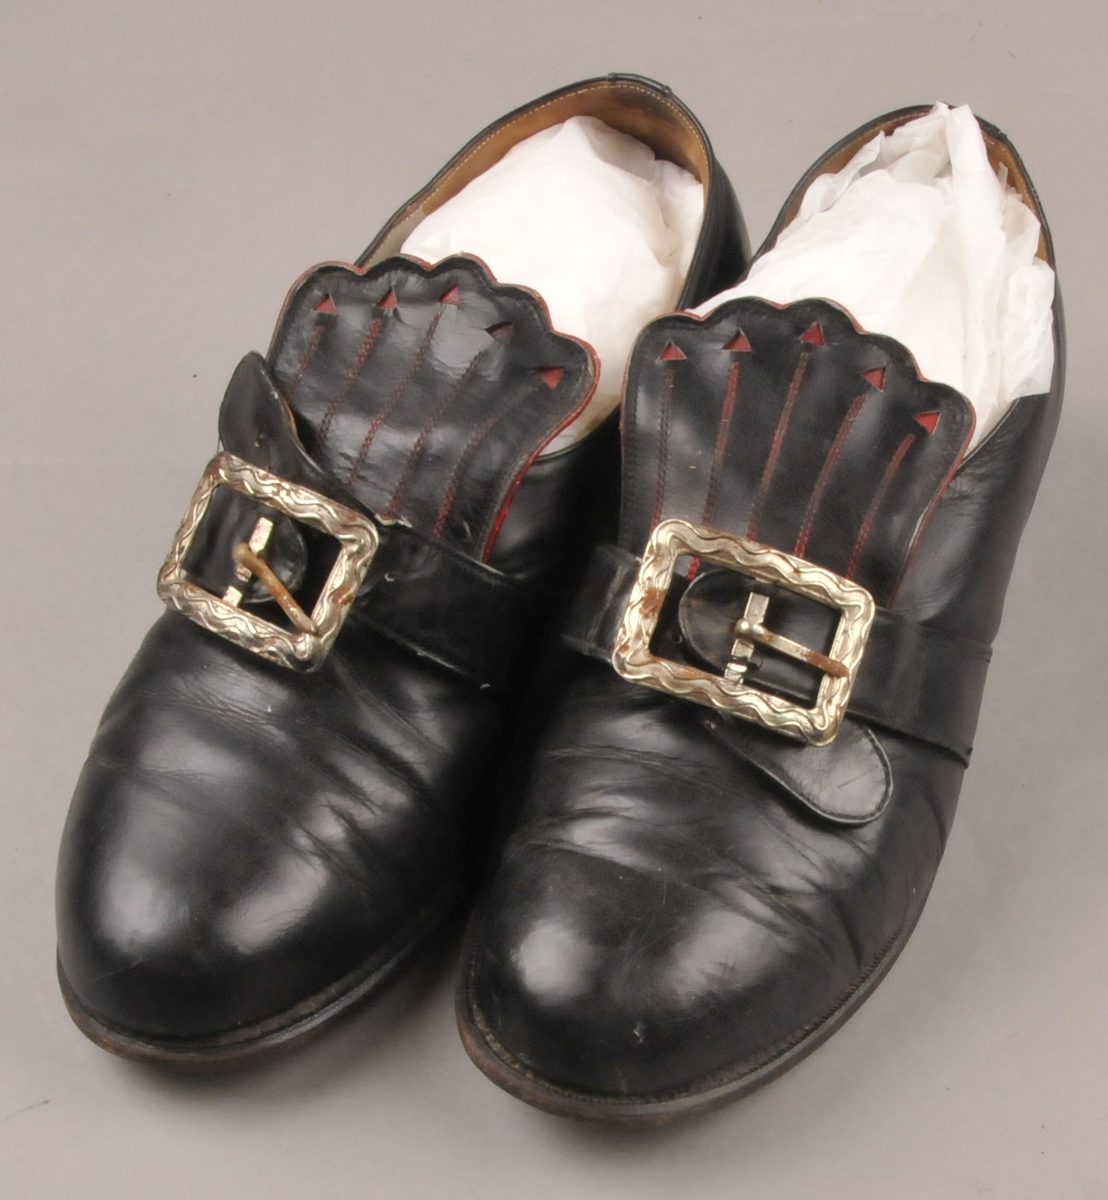 Svarte bunadsko med raud dekor på pløsa. Støpt metallspenne. Skoene har fått nye hælar, som er plugga med metallnaglar.